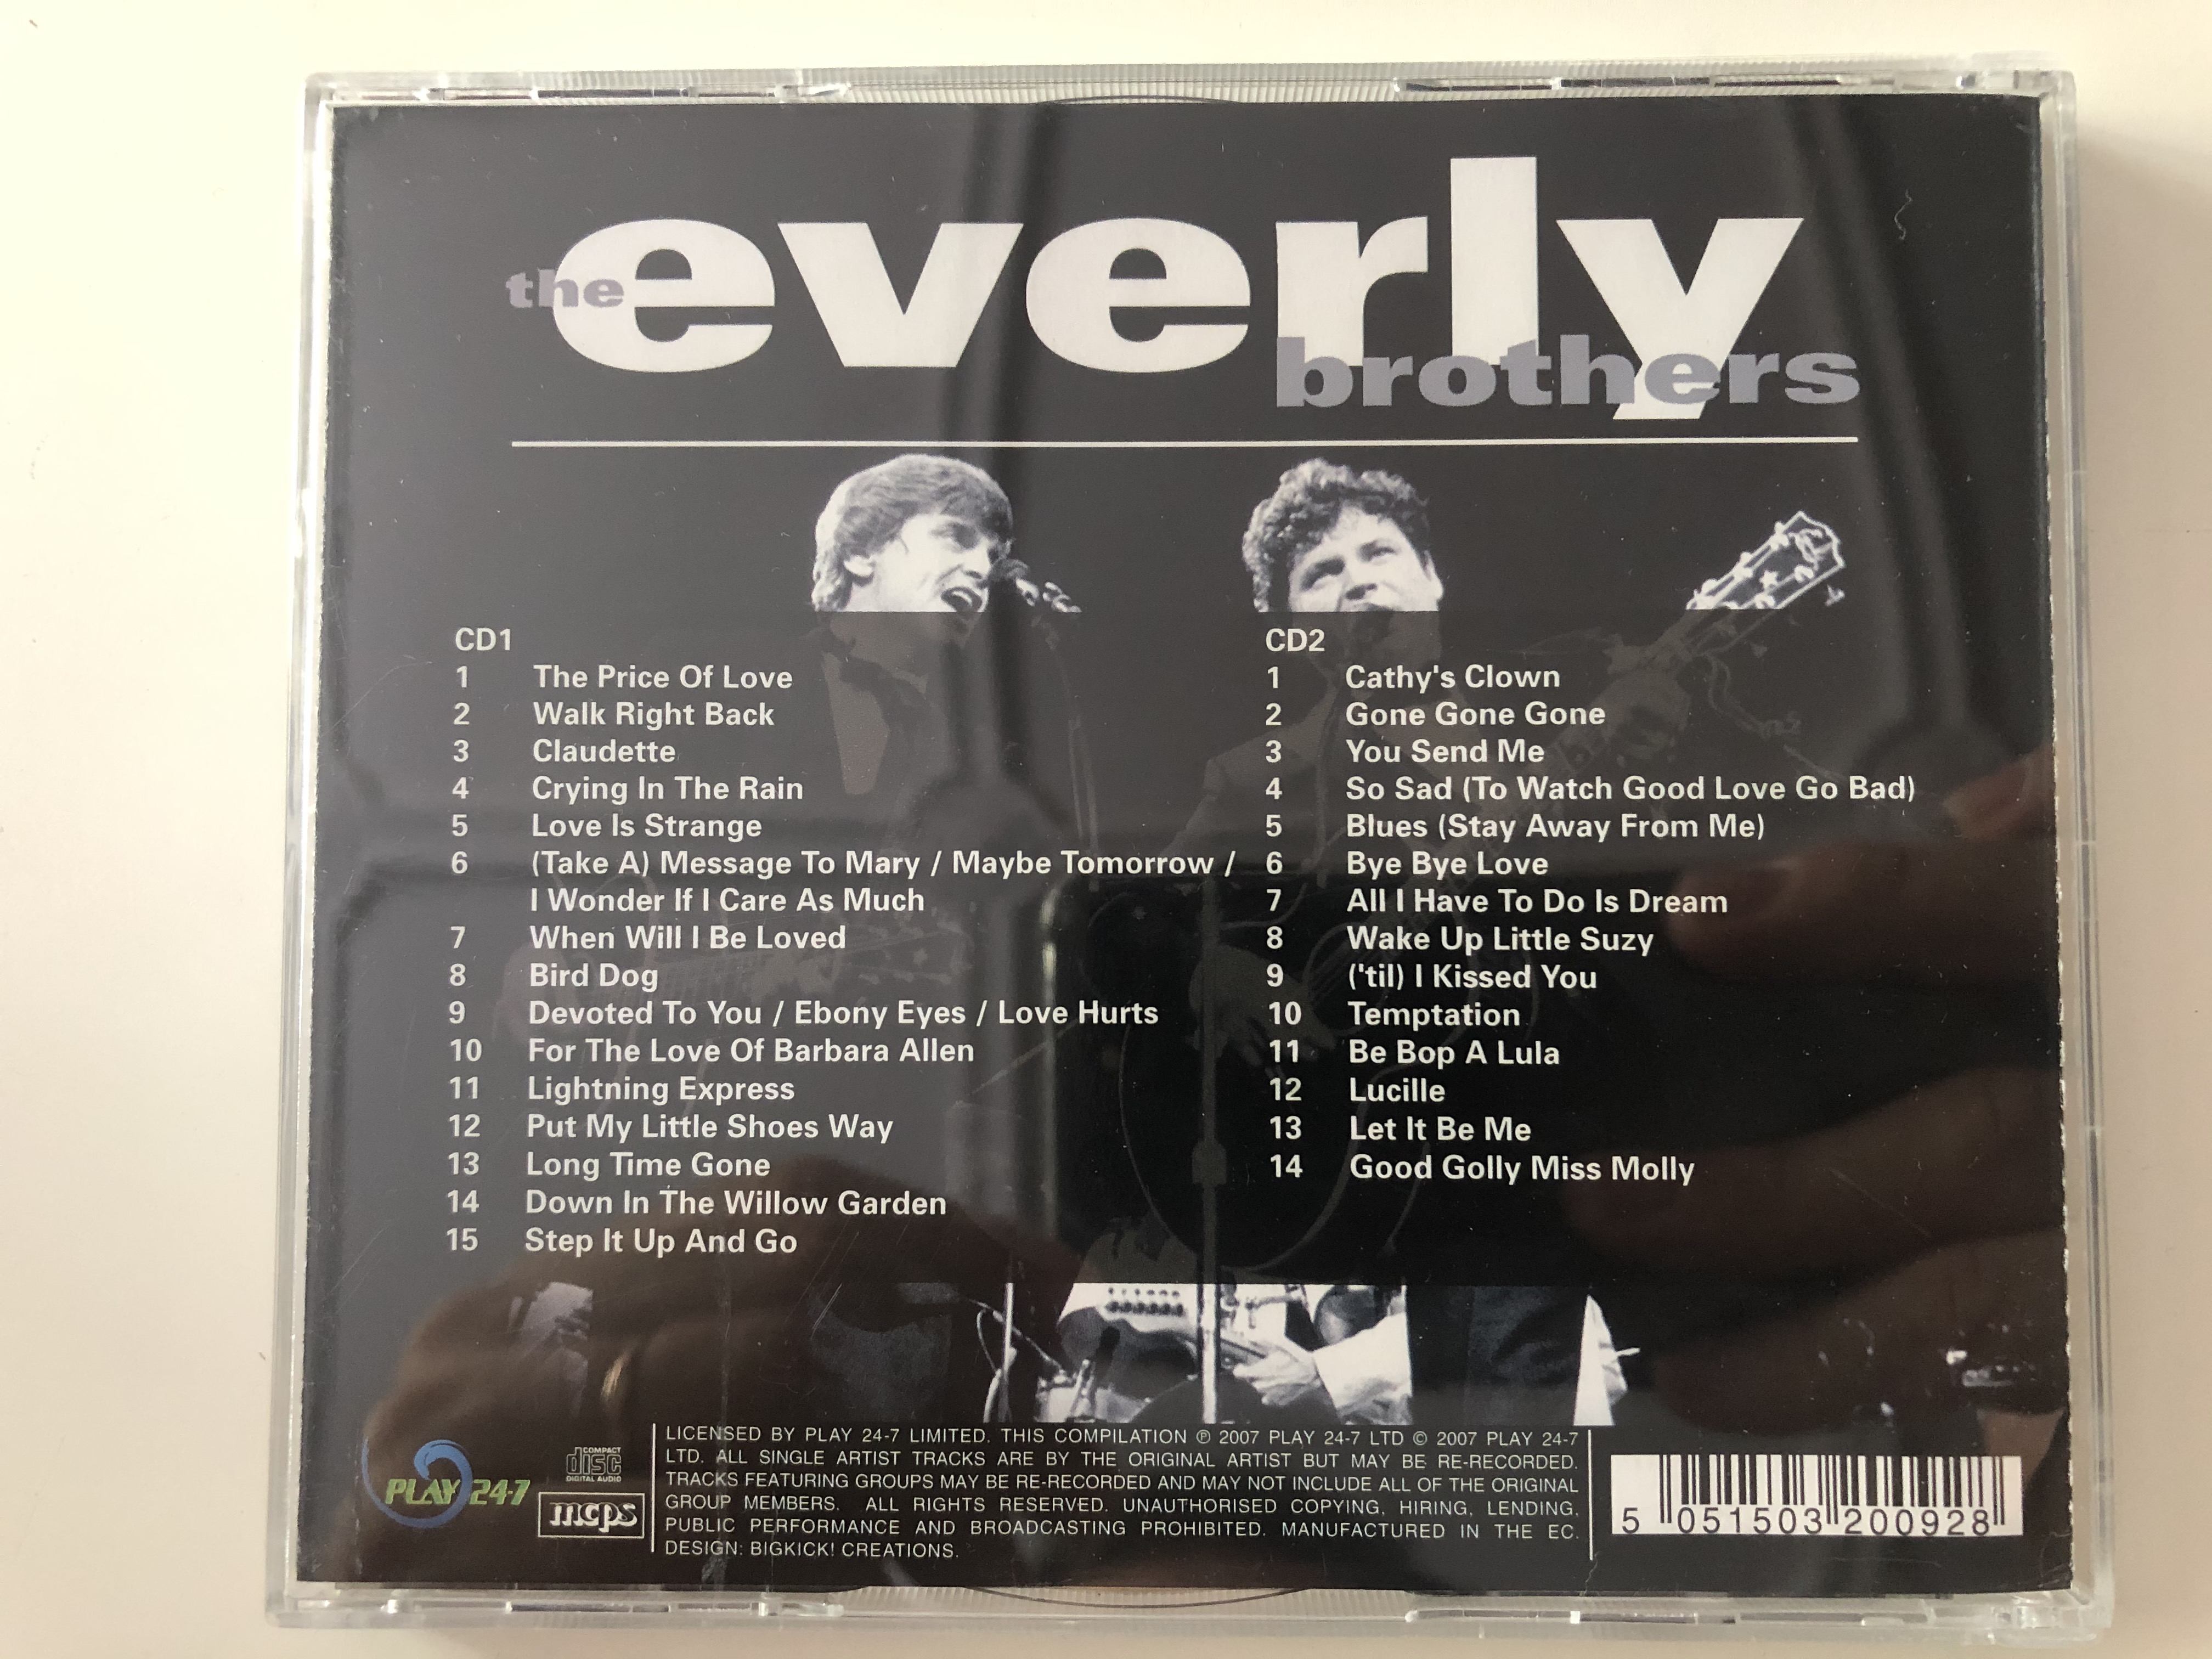 the-everly-brothers-play-24-7-ltd.-2x-audio-cd-2007-play2-022-6-.jpg